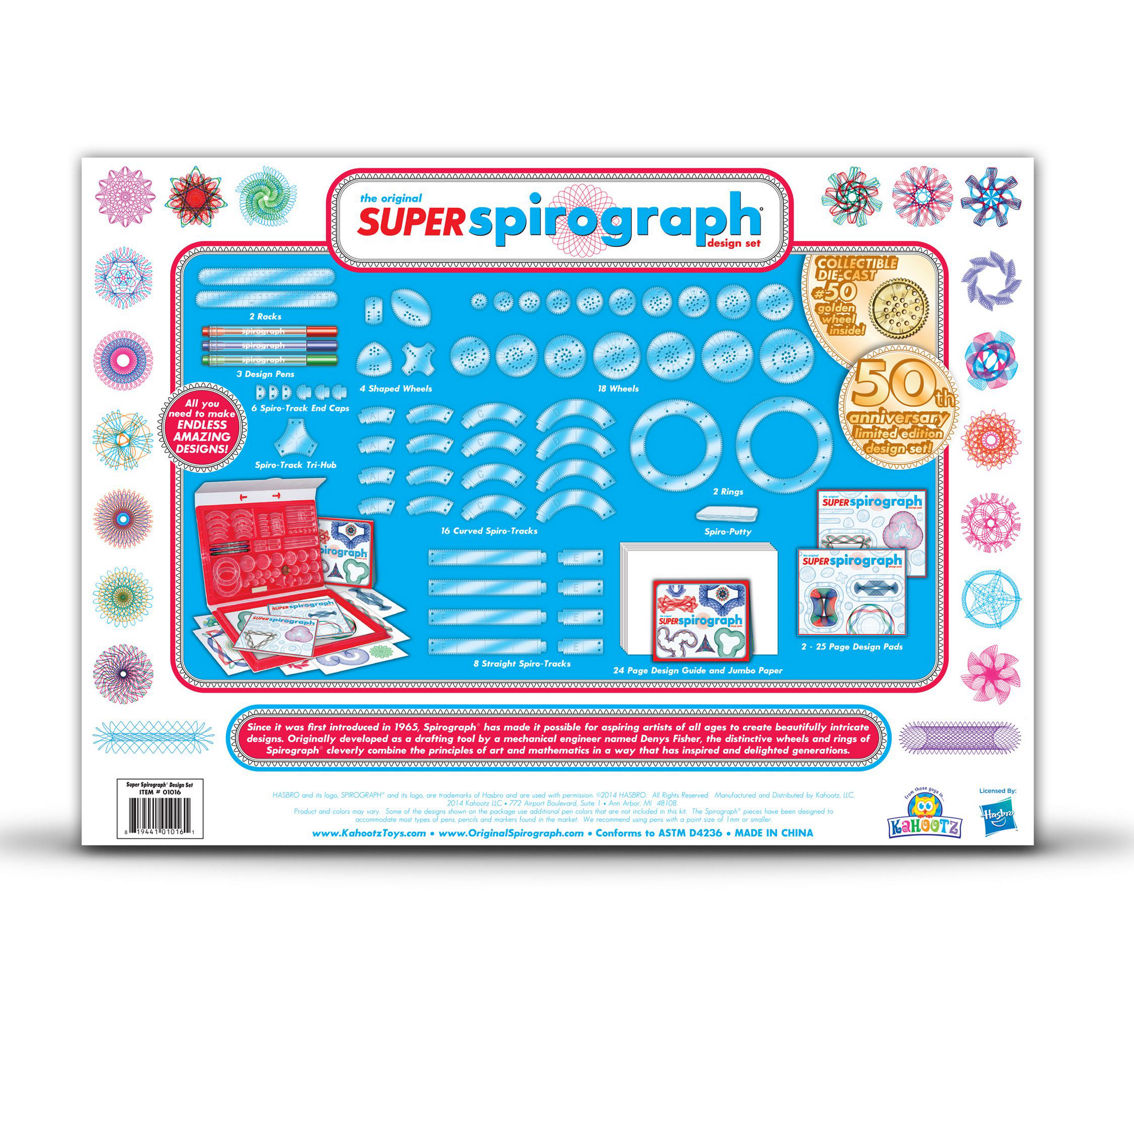 Spirograph Super Spirograph Design Set - Image 3 of 4